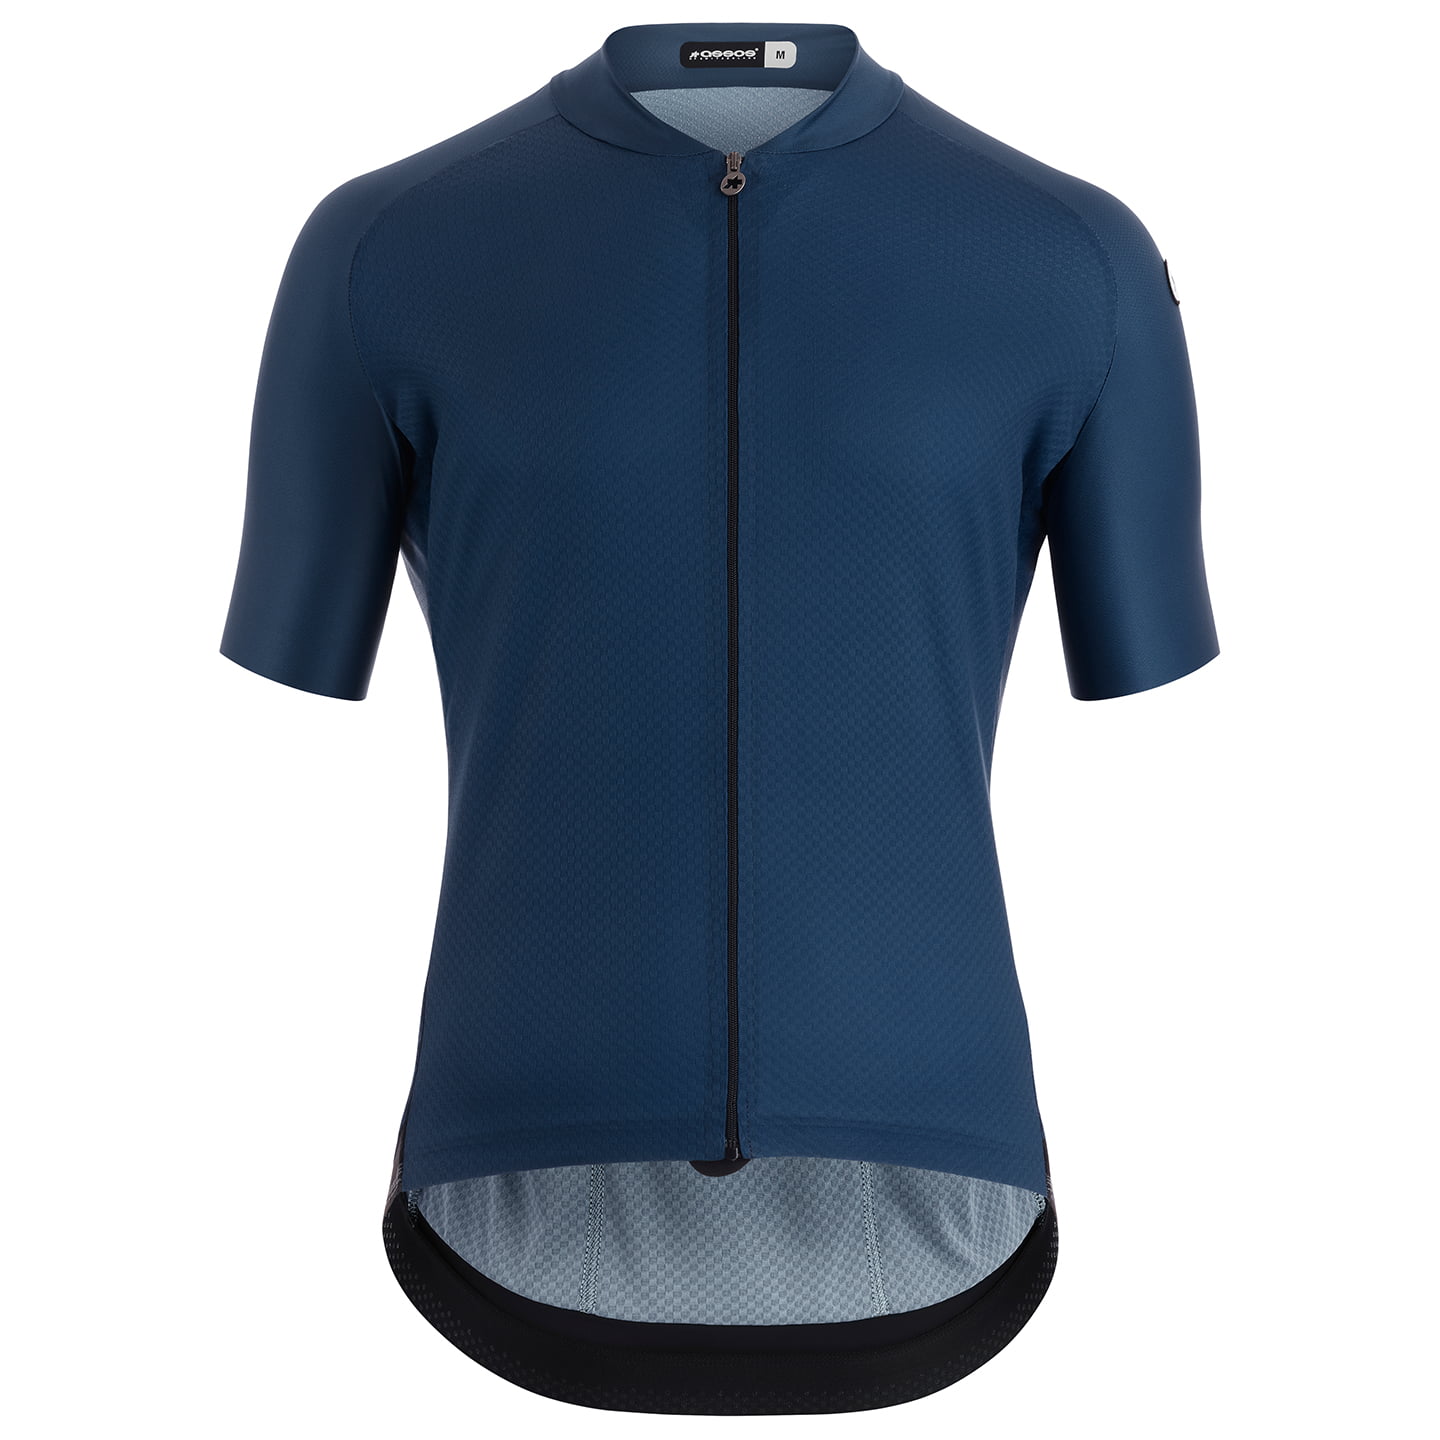 ASSOS Mille GT C2 EVO Short Sleeve Jersey Short Sleeve Jersey, for men, size M, Cycling jersey, Cycling clothing